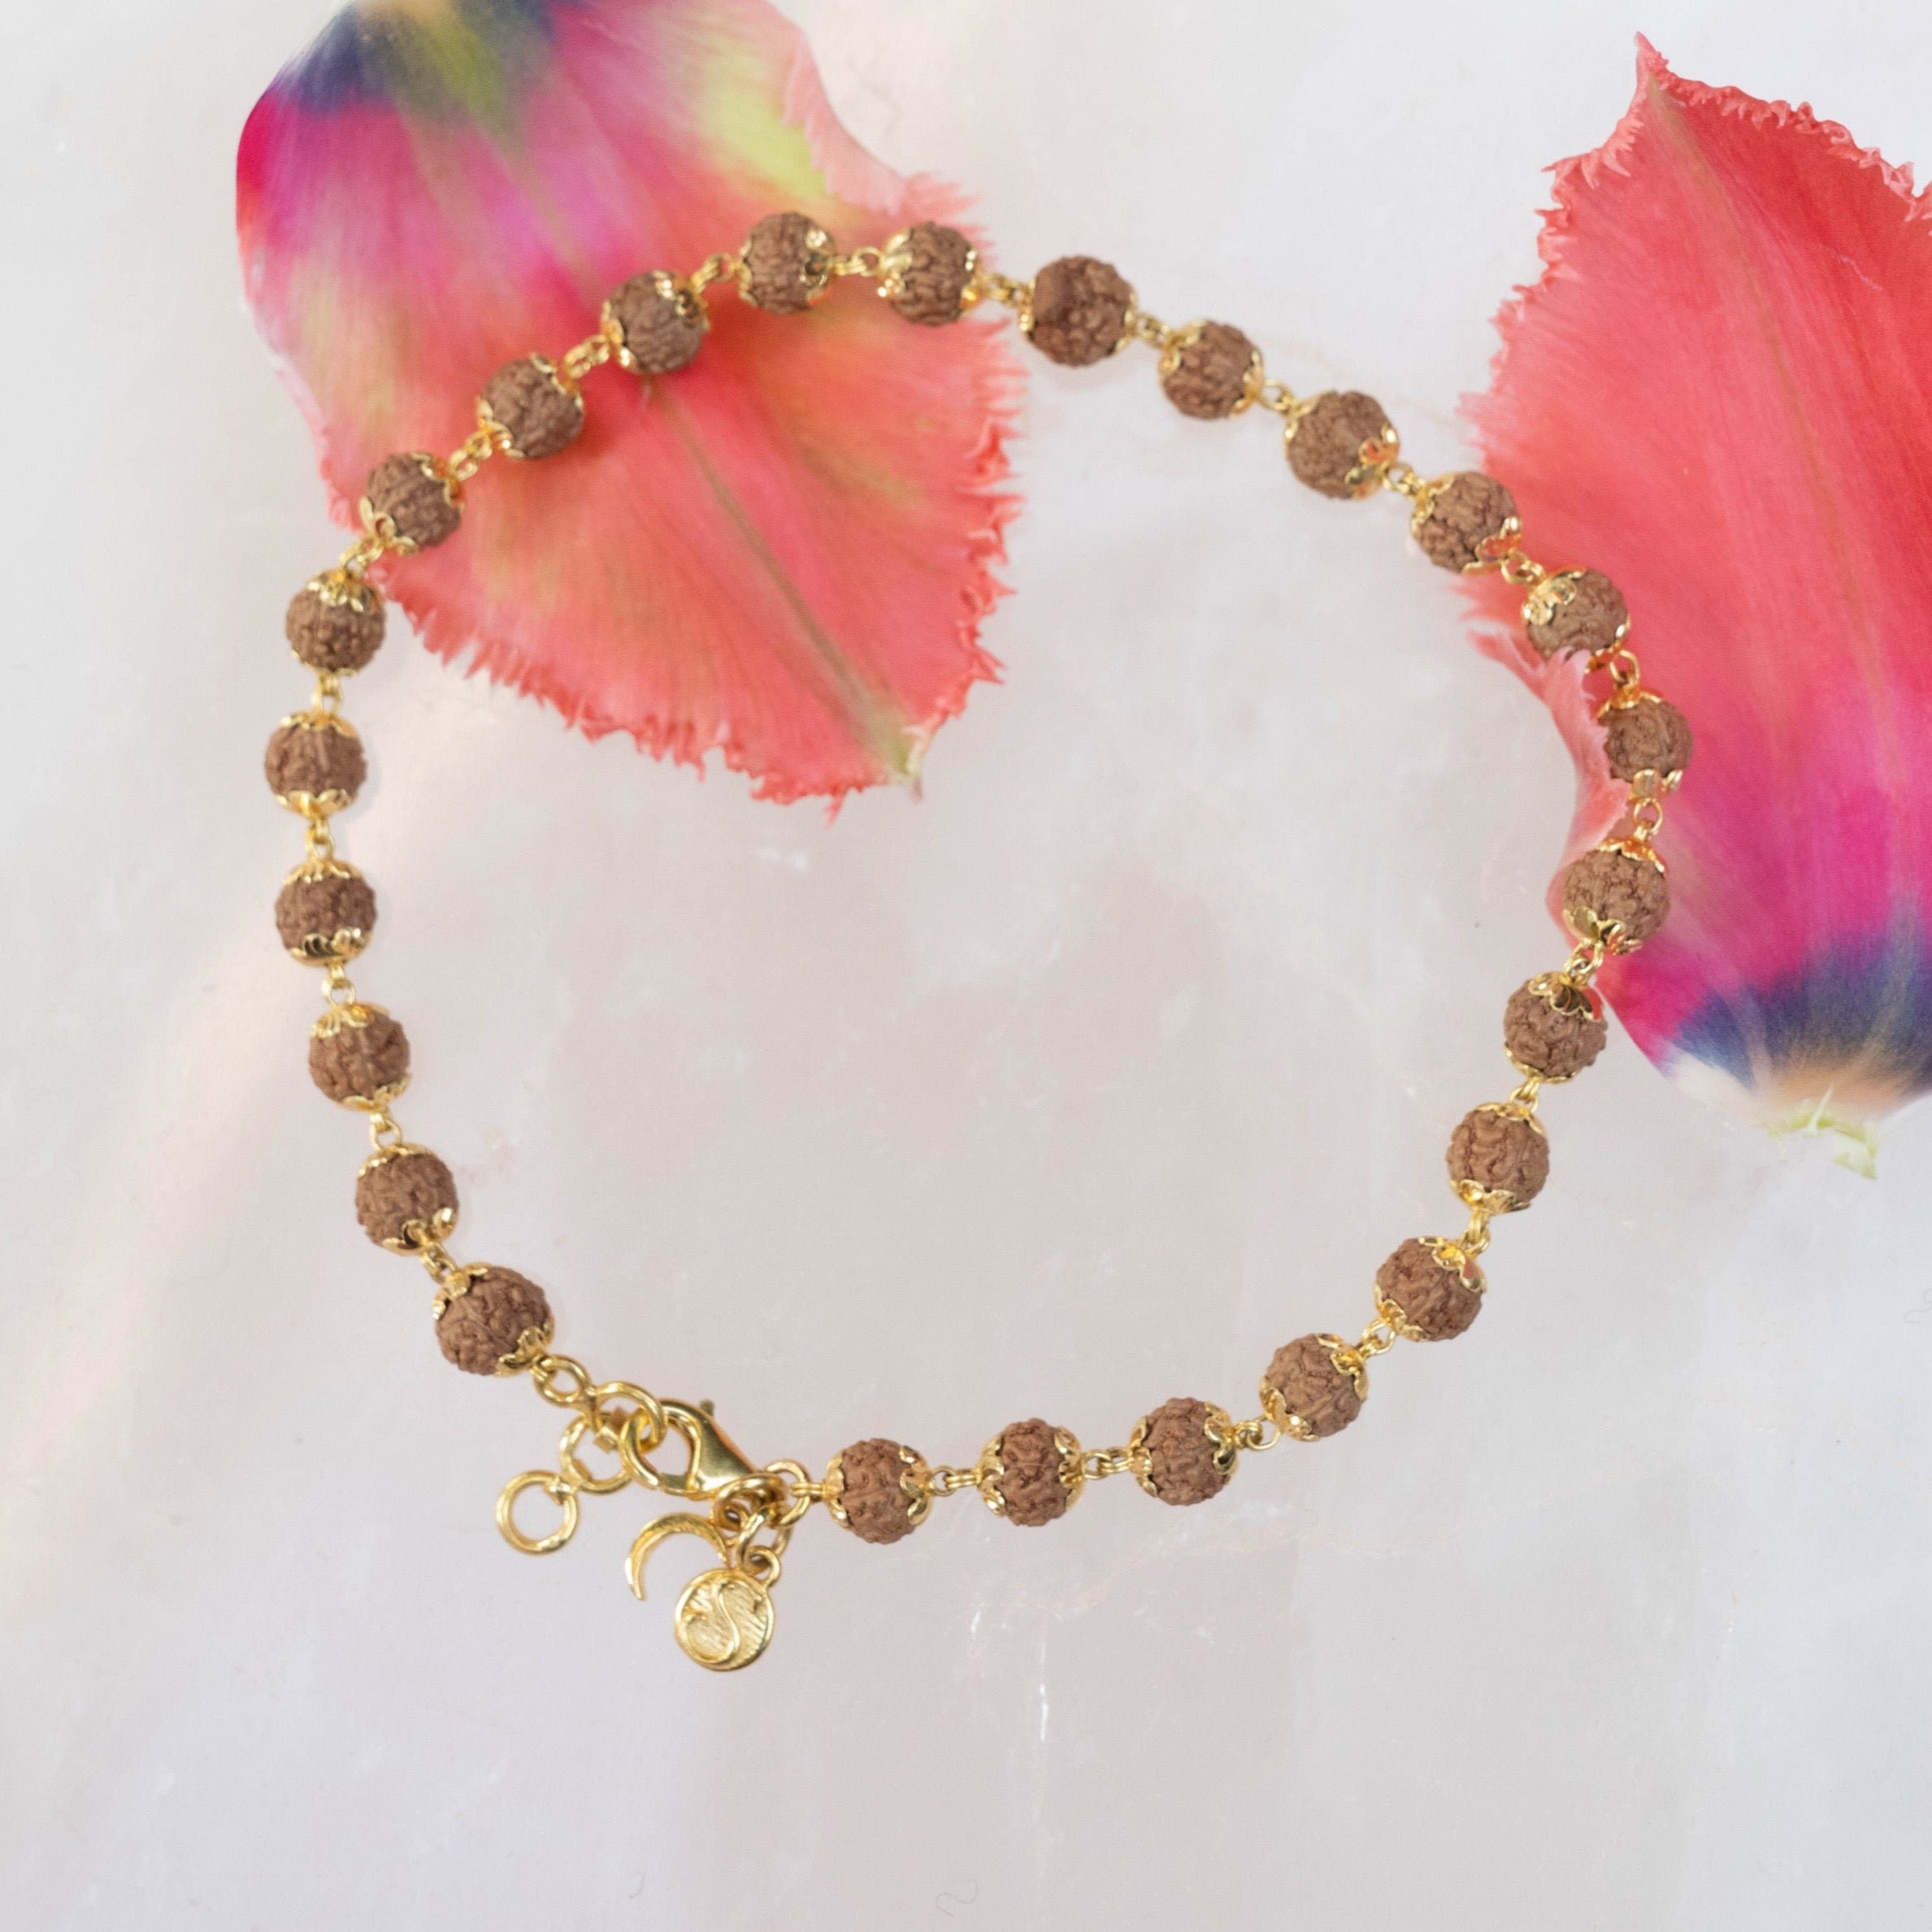 22k Gold Rudraksha Bracelet - AjBr62934 - 22kt Gold Bracelet for men is  beaded with Rudraksha beads and gold balls in an alternate pattern wit